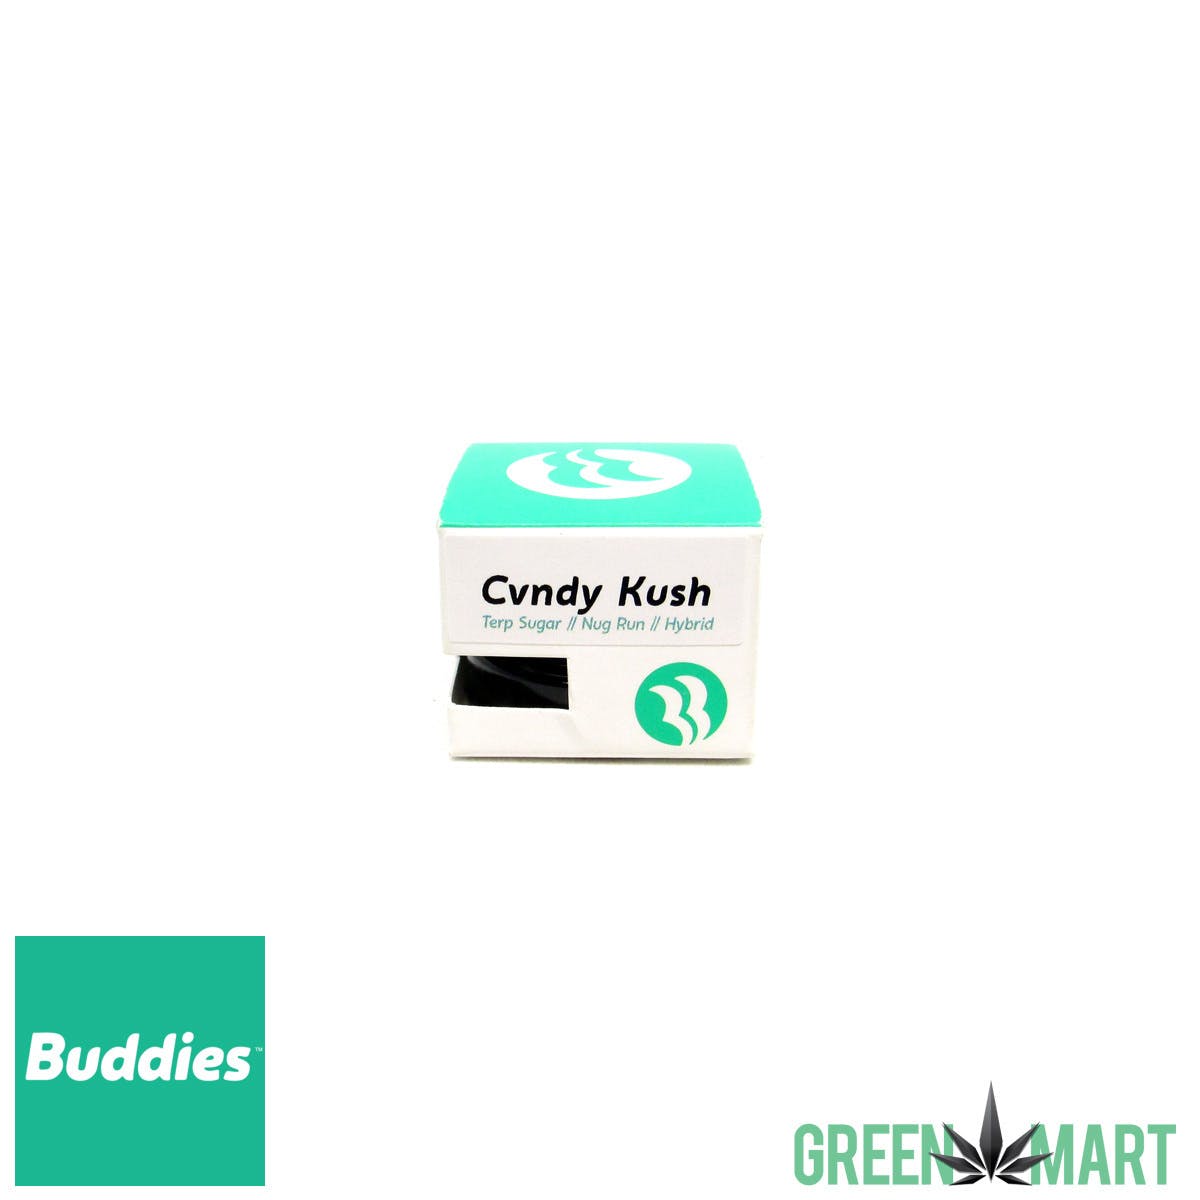 Buddies 1g Terp Sugar Dab - Candy Kush